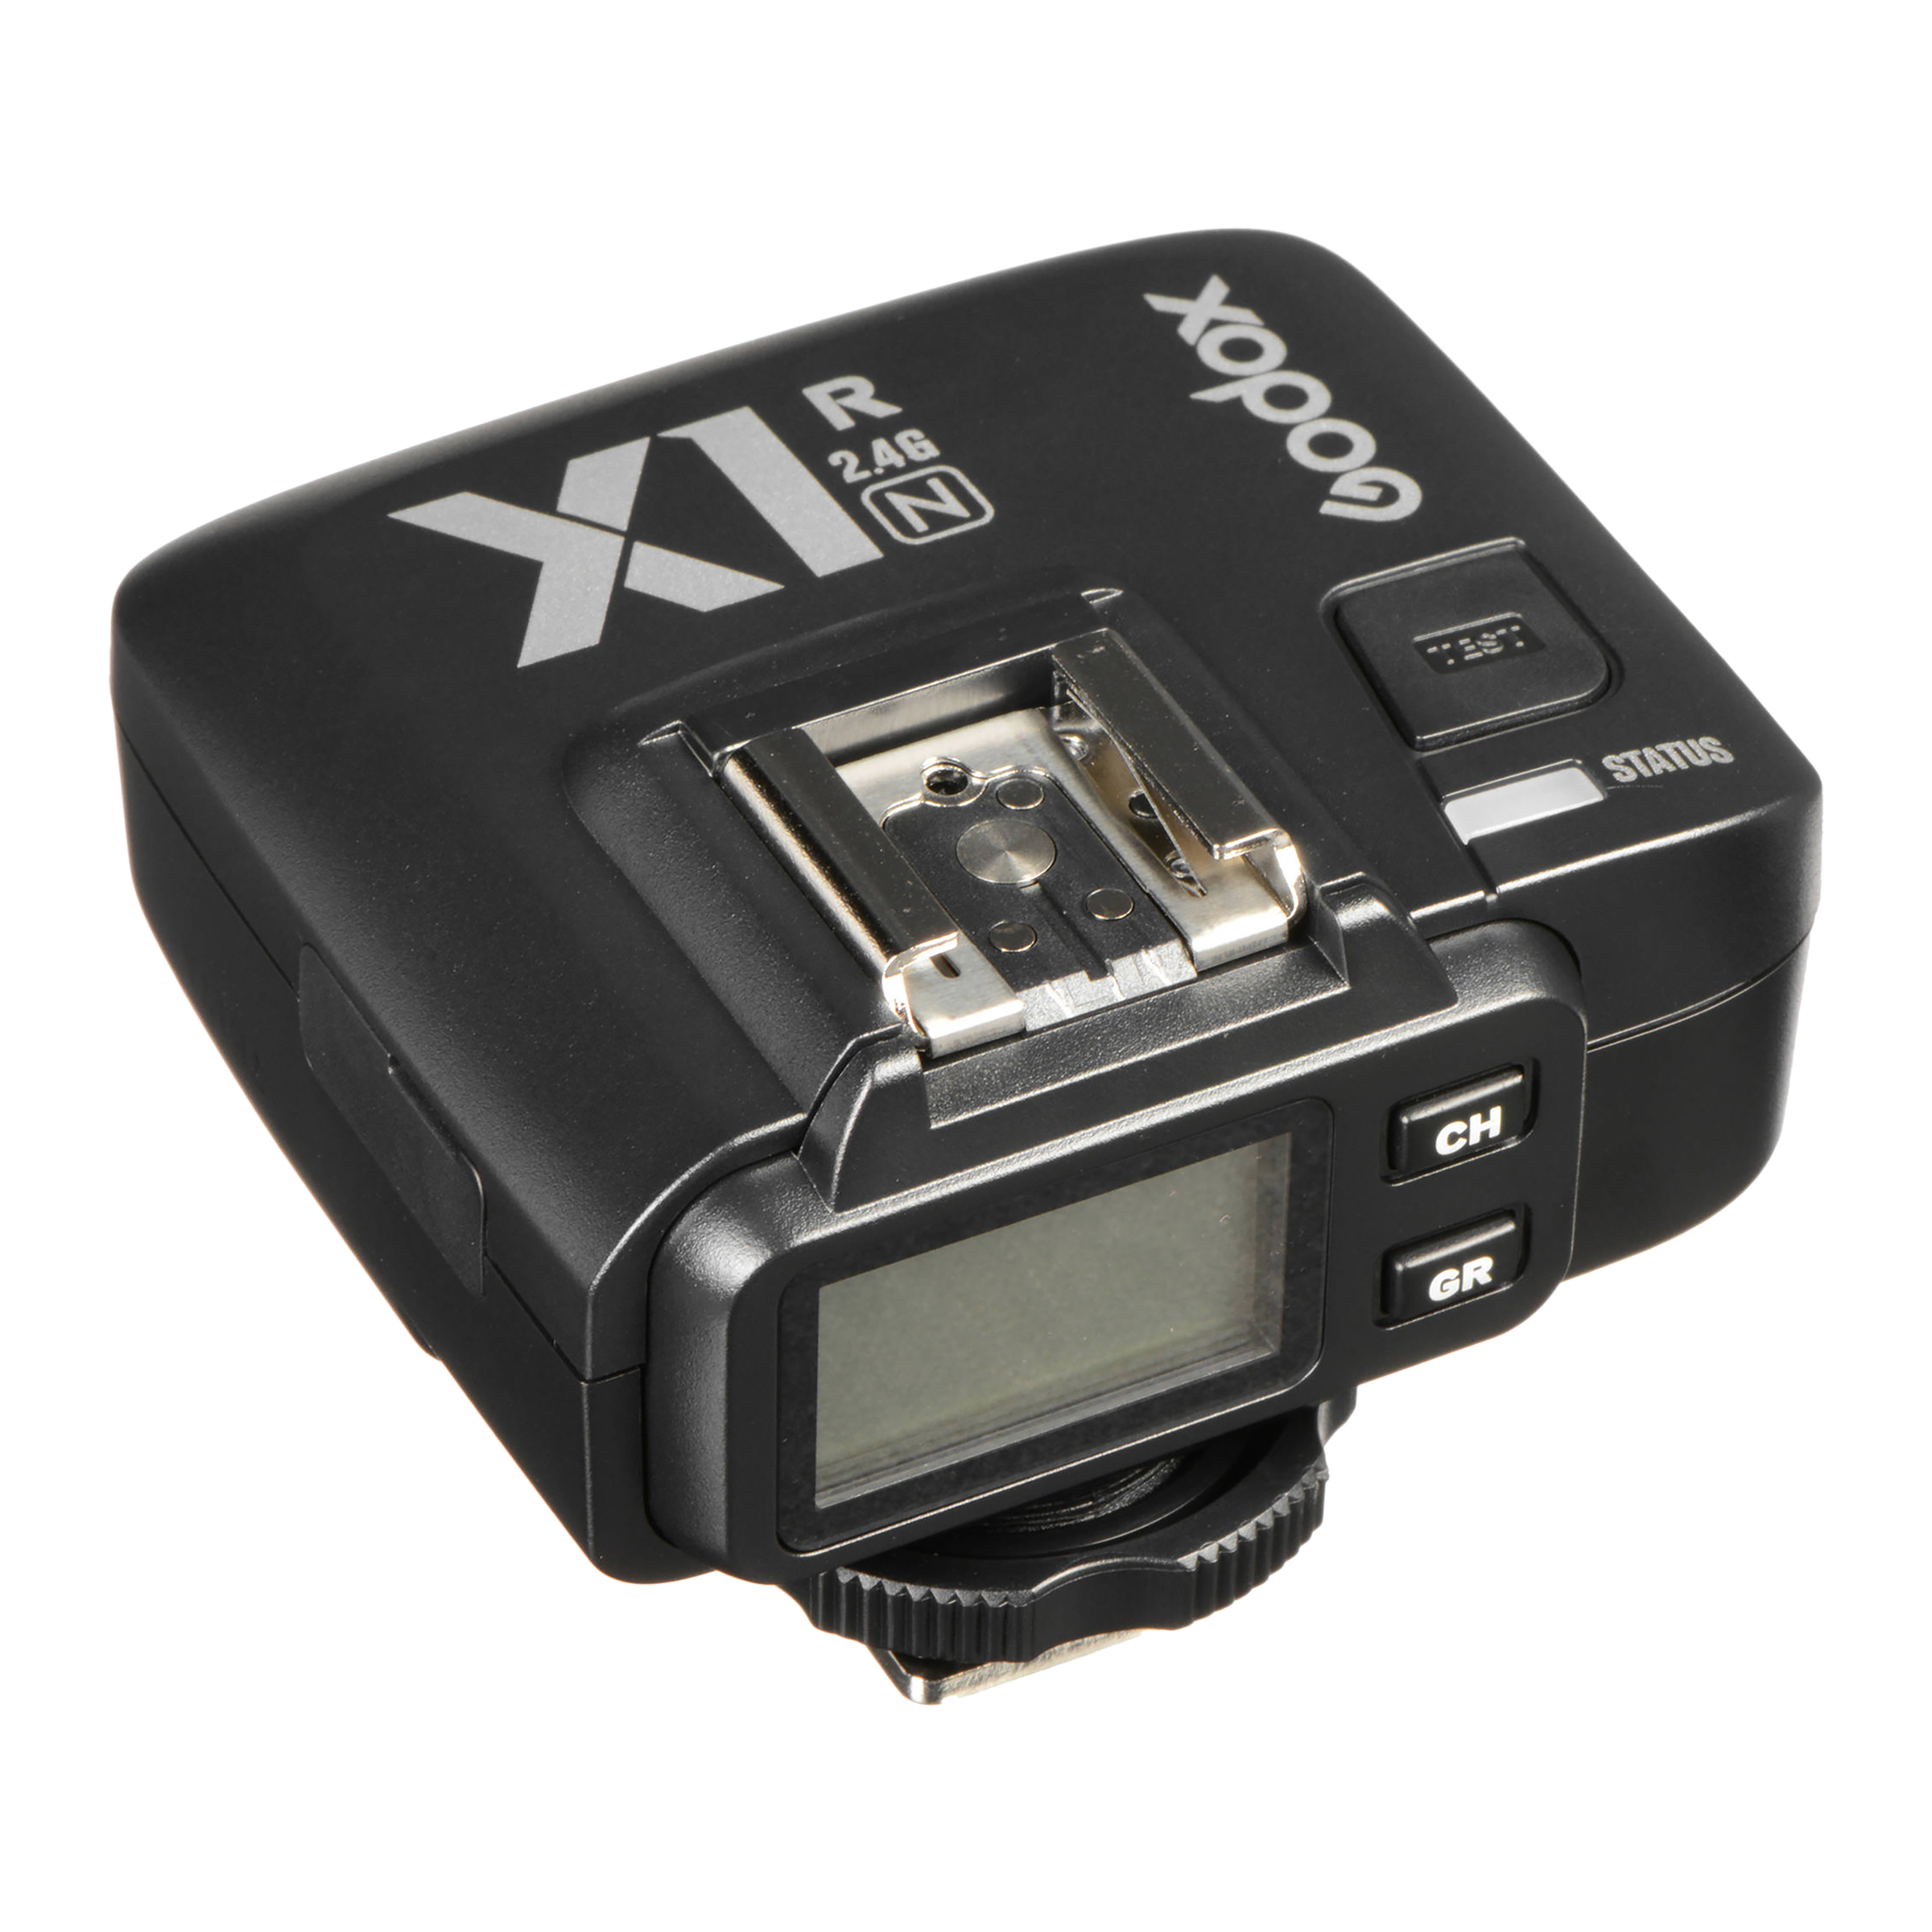 Godox X1R-N Wireless Flash Trigger for Nikon (Built-in 2.4G Wireless Transmission)